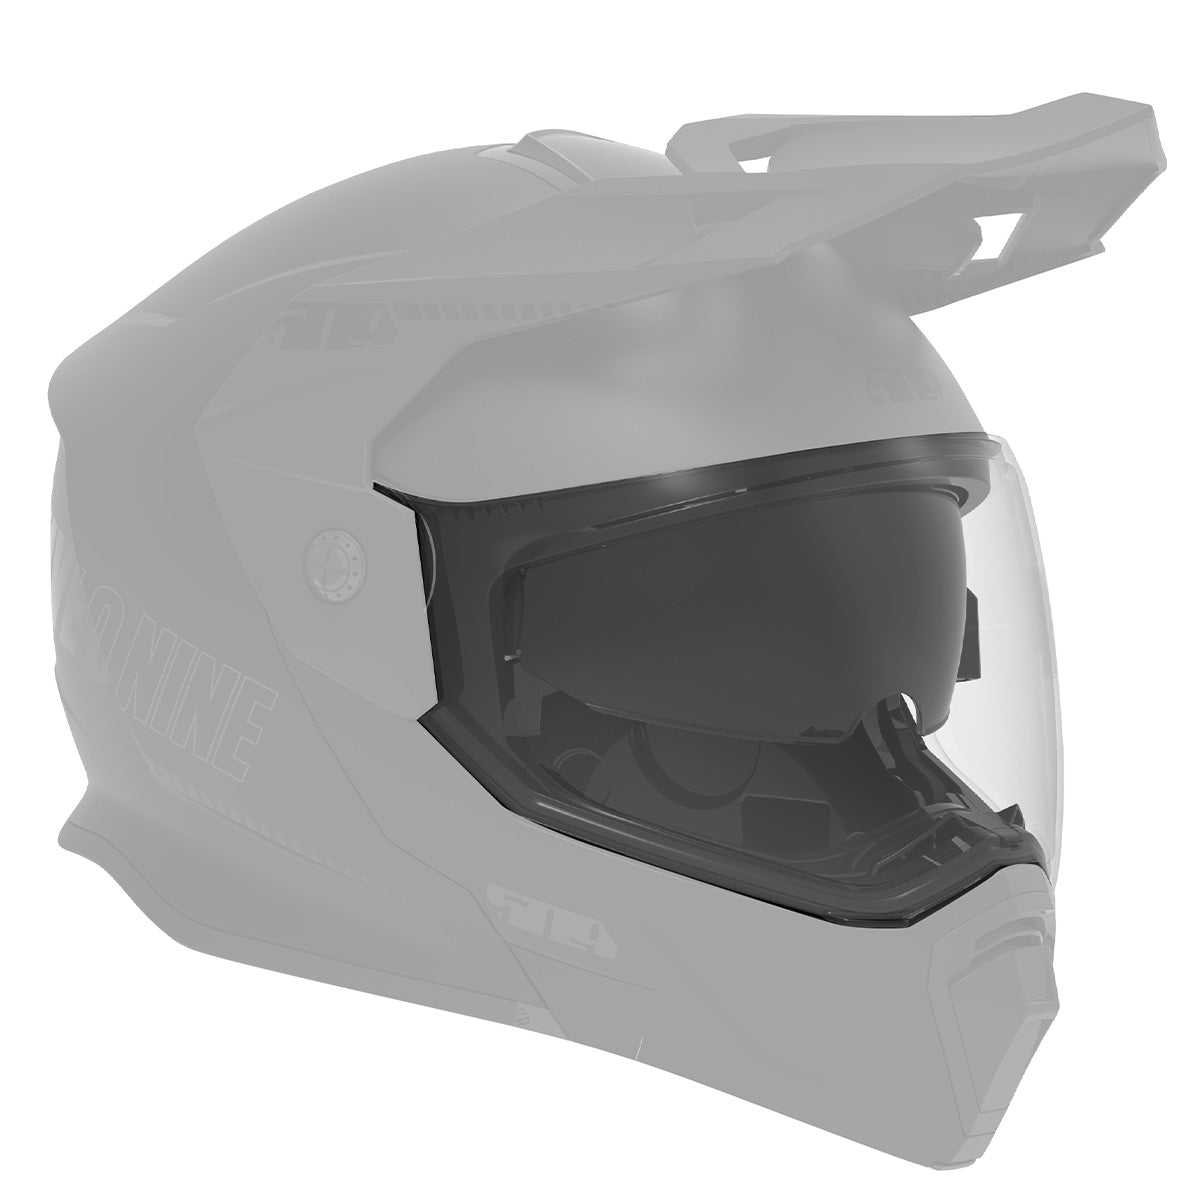 Dual Shield For Delta R4 Helmets